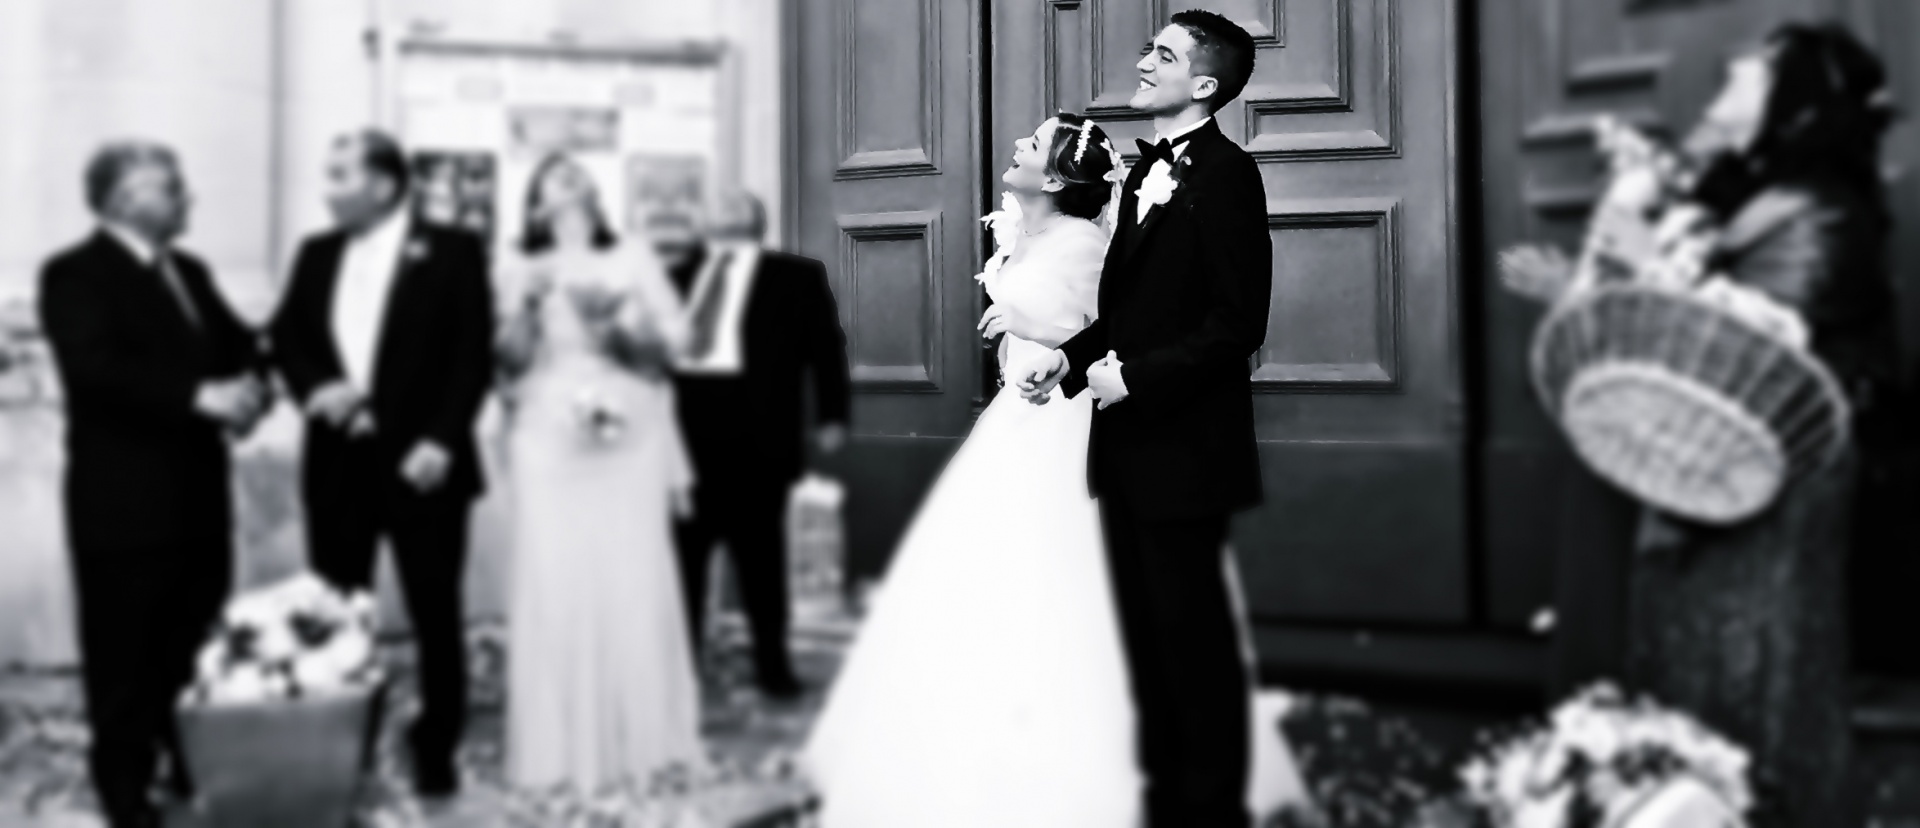 https://www.publicdomainpictures.net/pictures/150000/velka/the-wedding-bandw-blurred.jpg